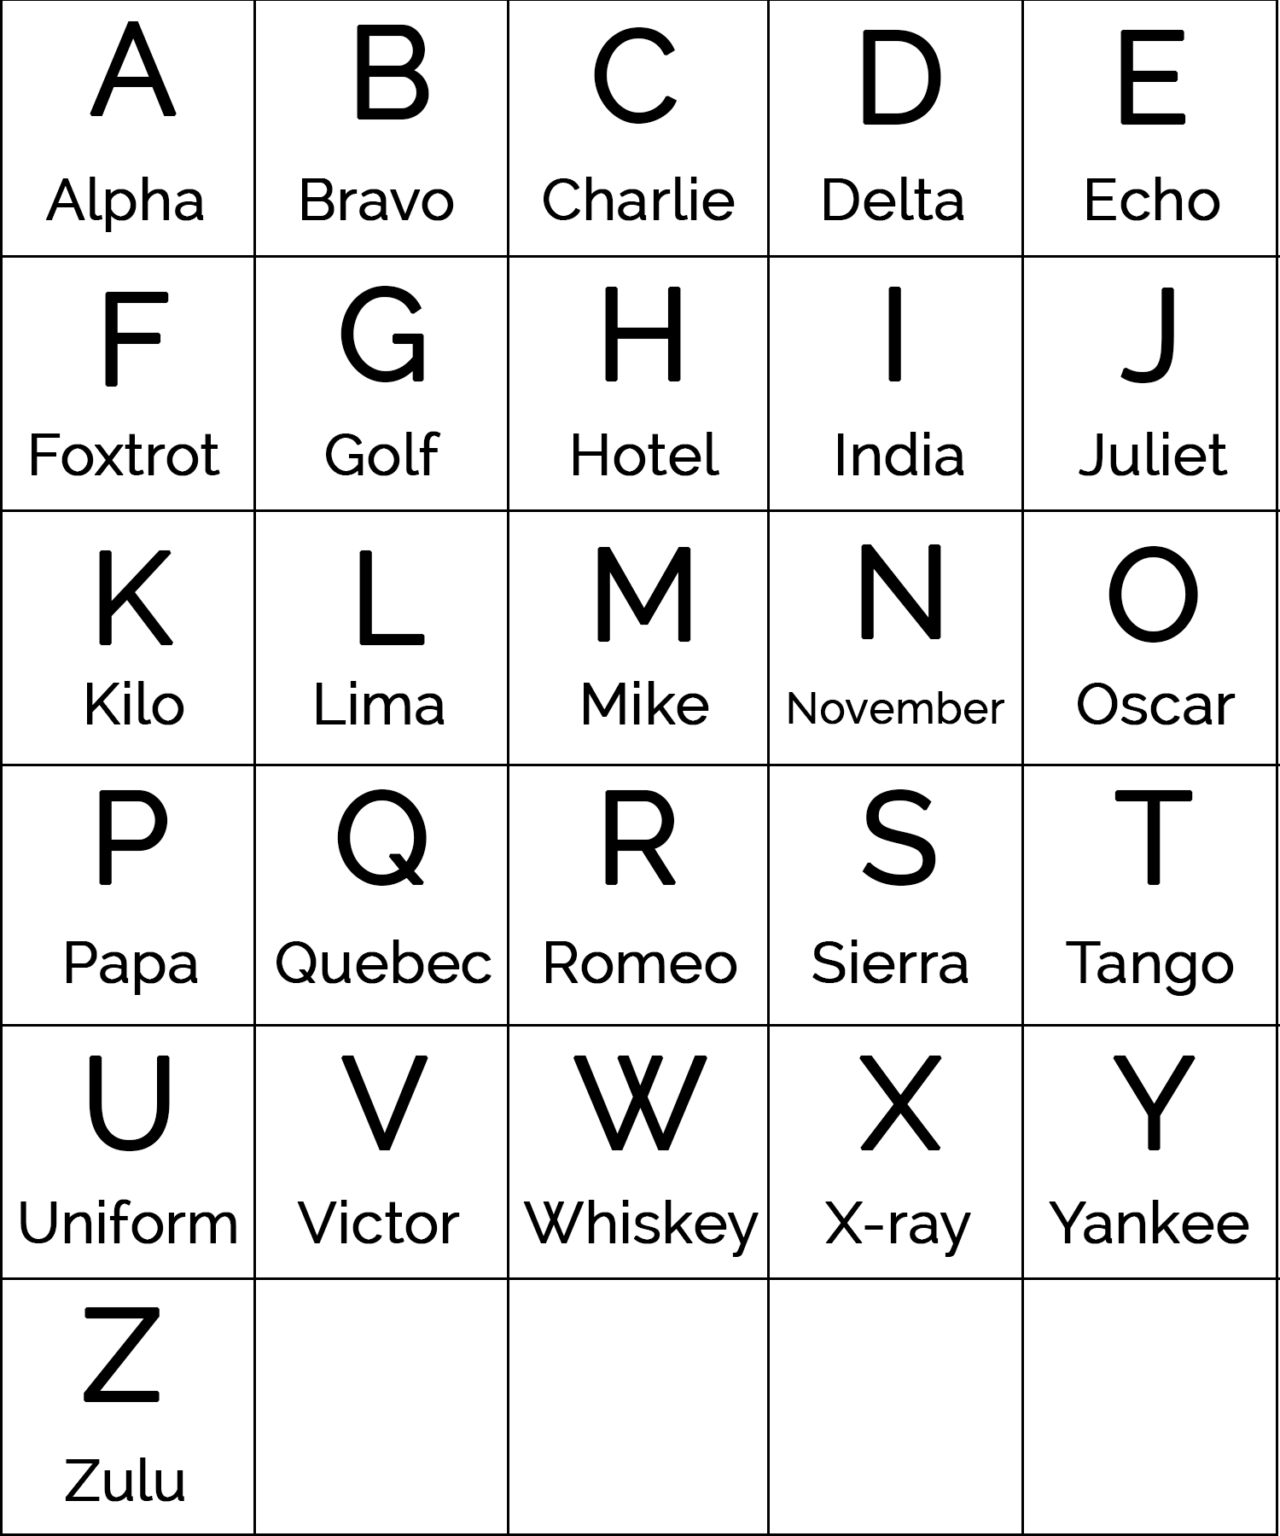 military-alphabet-code-in-spanish-military-alphabet